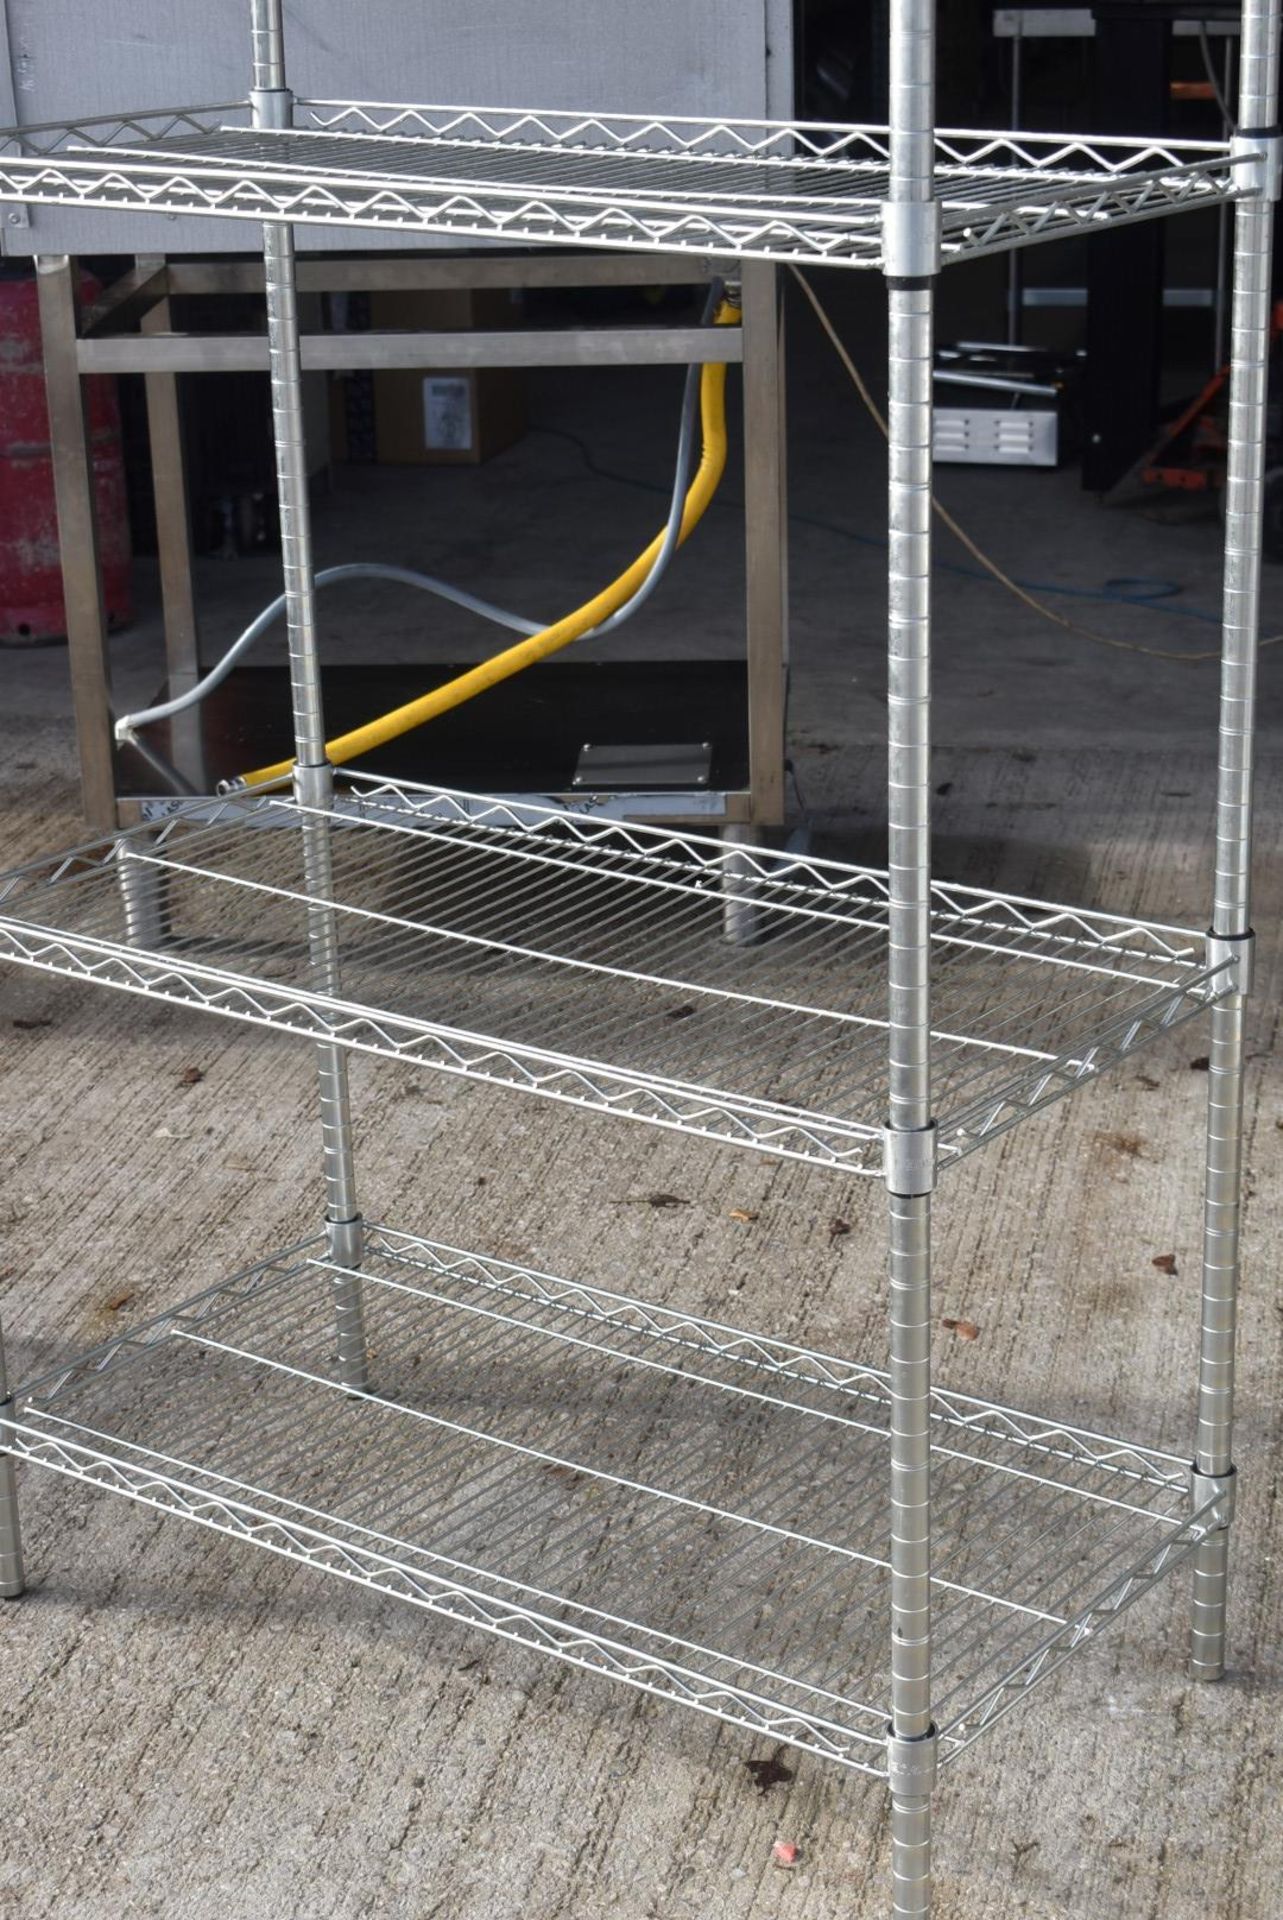 1 x Commercial Wire Storage Shelf Unit - Size: H184 x W90 x D45 cms - Image 2 of 4